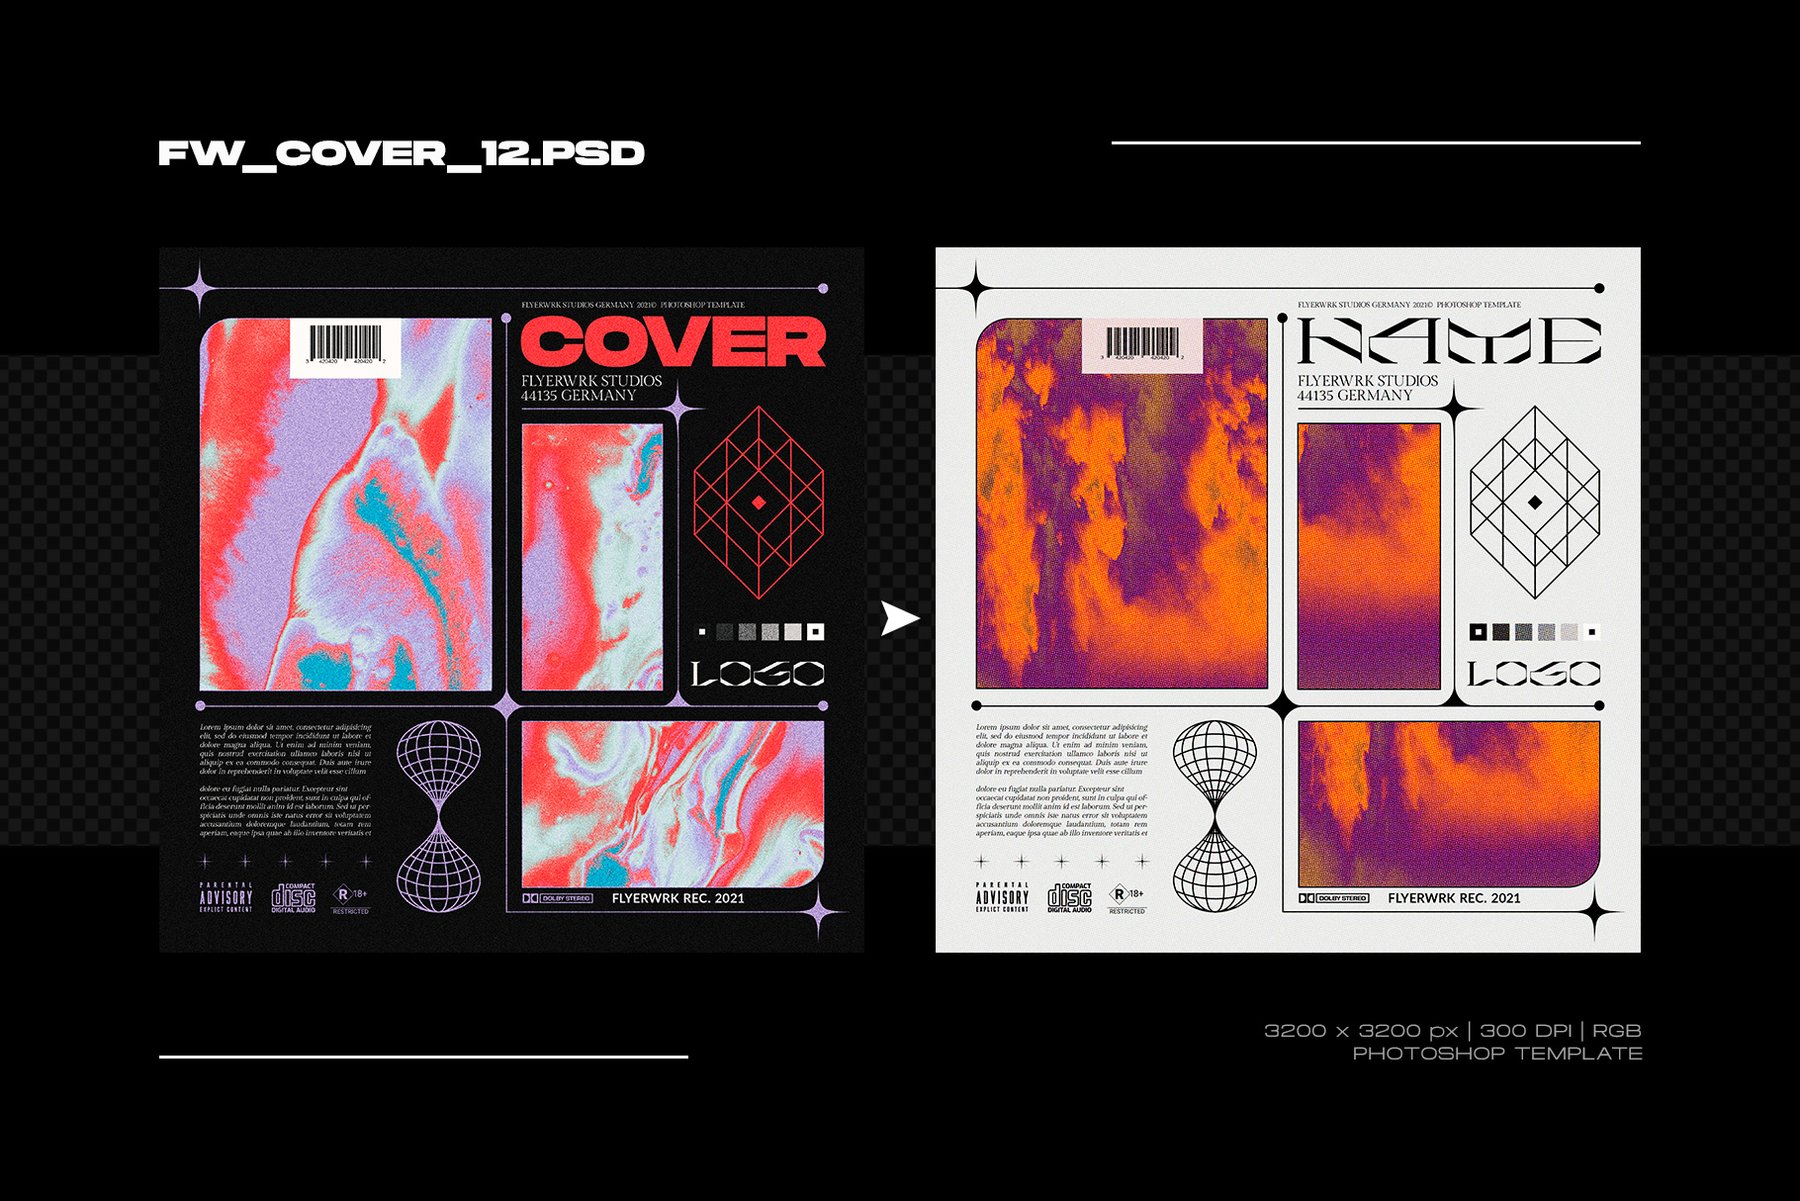 Flyerwrk 嘻哈说唱高级创意大胆艺术魅力封面设计Photoshop模板 COVER DESIGNS VOL.03 图标素材 第3张